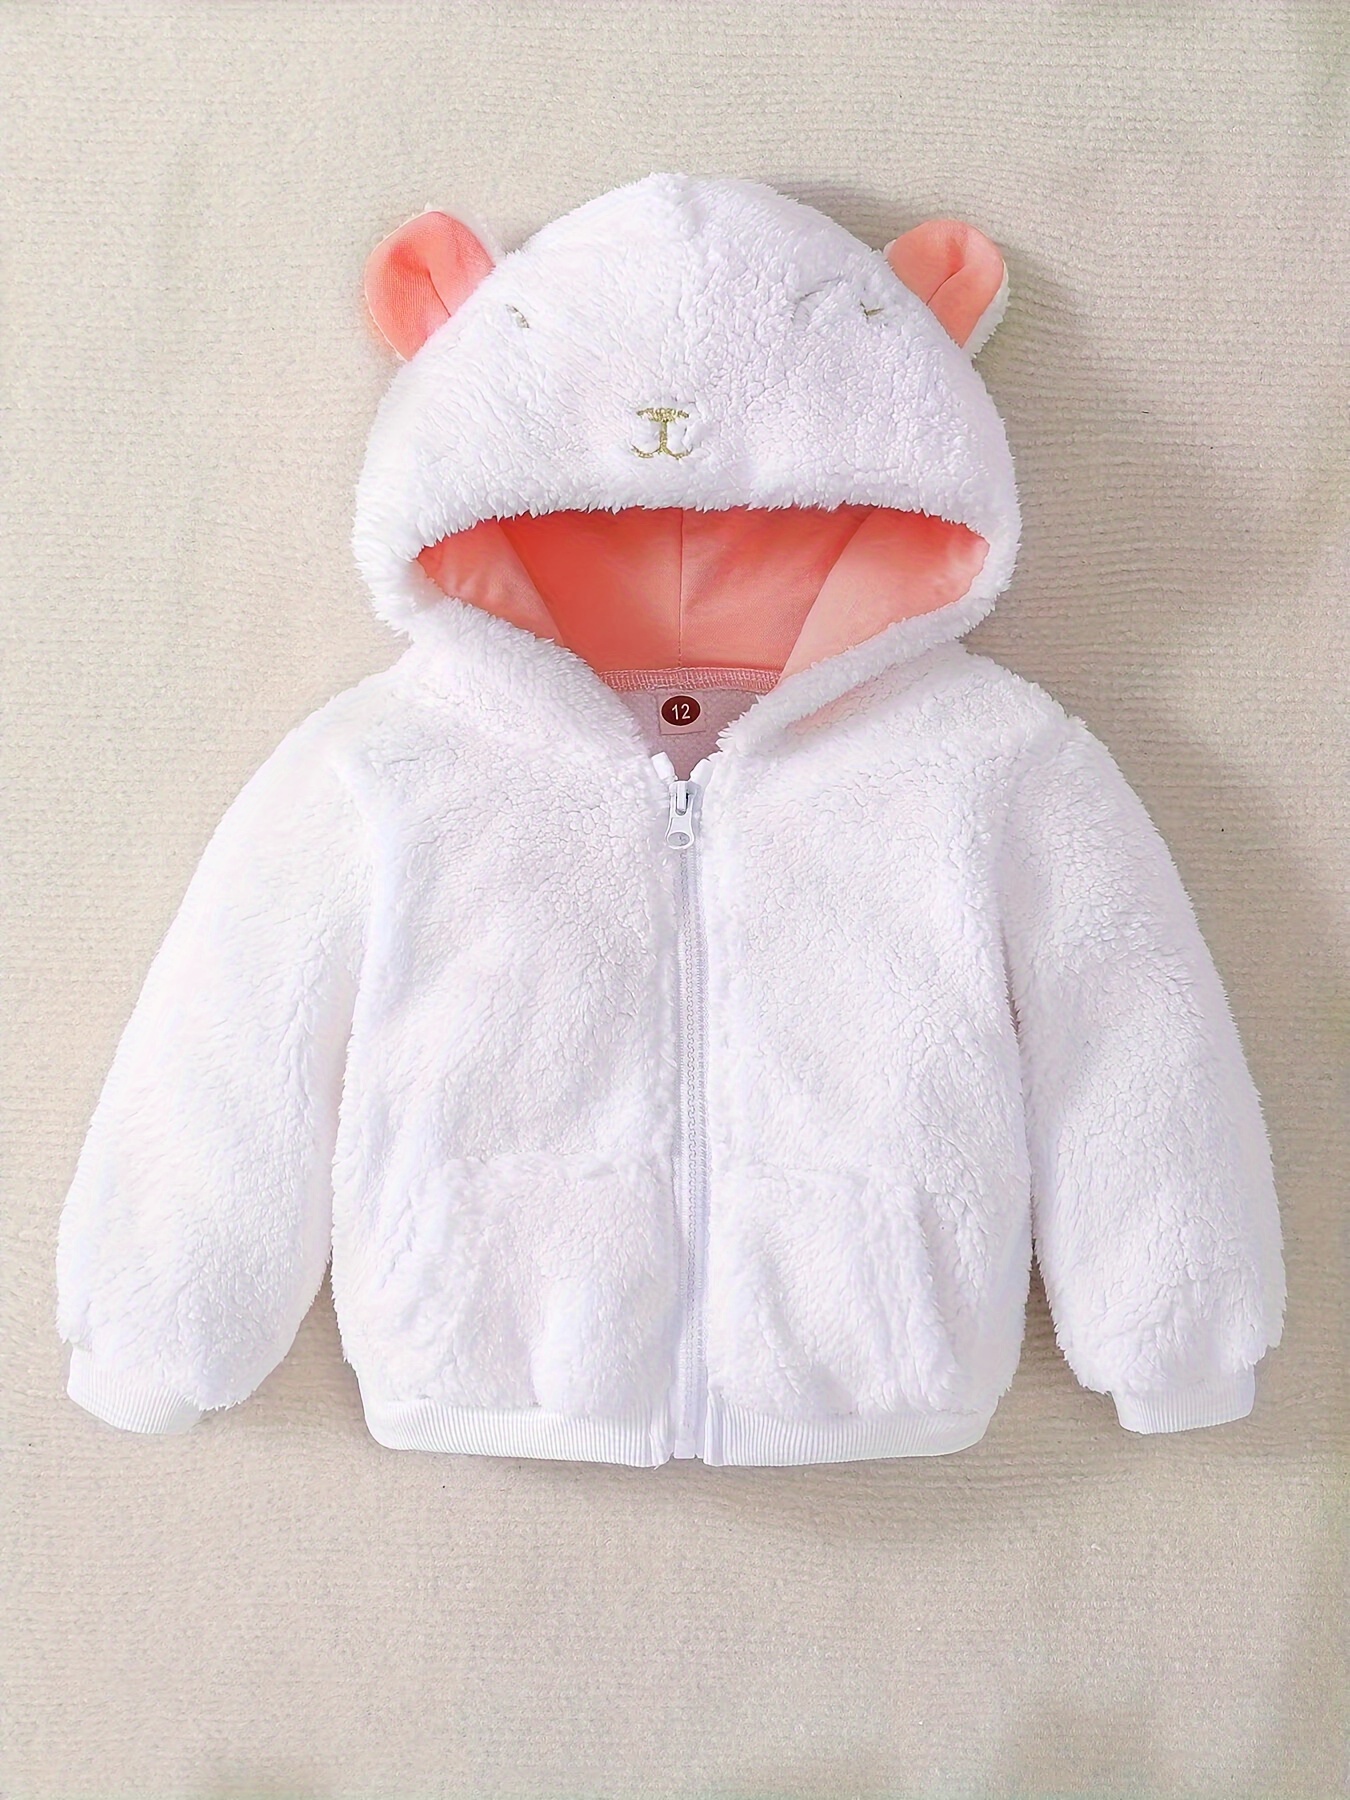 Warm Fleece Cute Bear Shape Jacket For Baby Boys And Girls, Kids